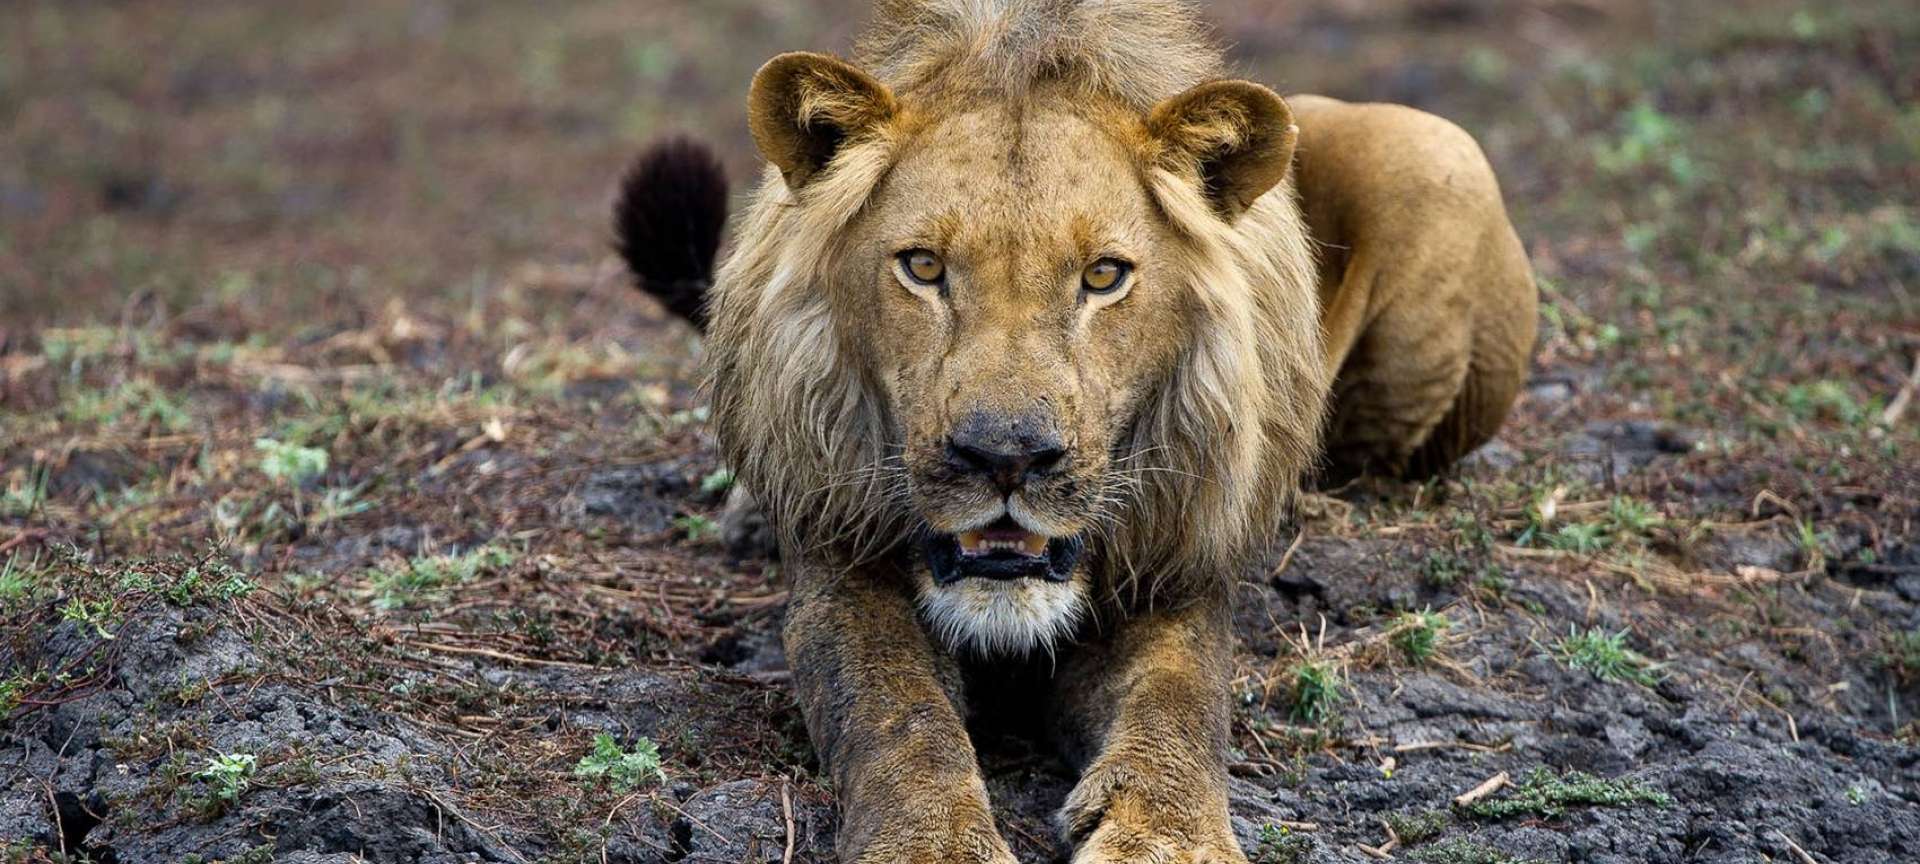 Lion safaris in Africa - Africa Wildlife Safaris